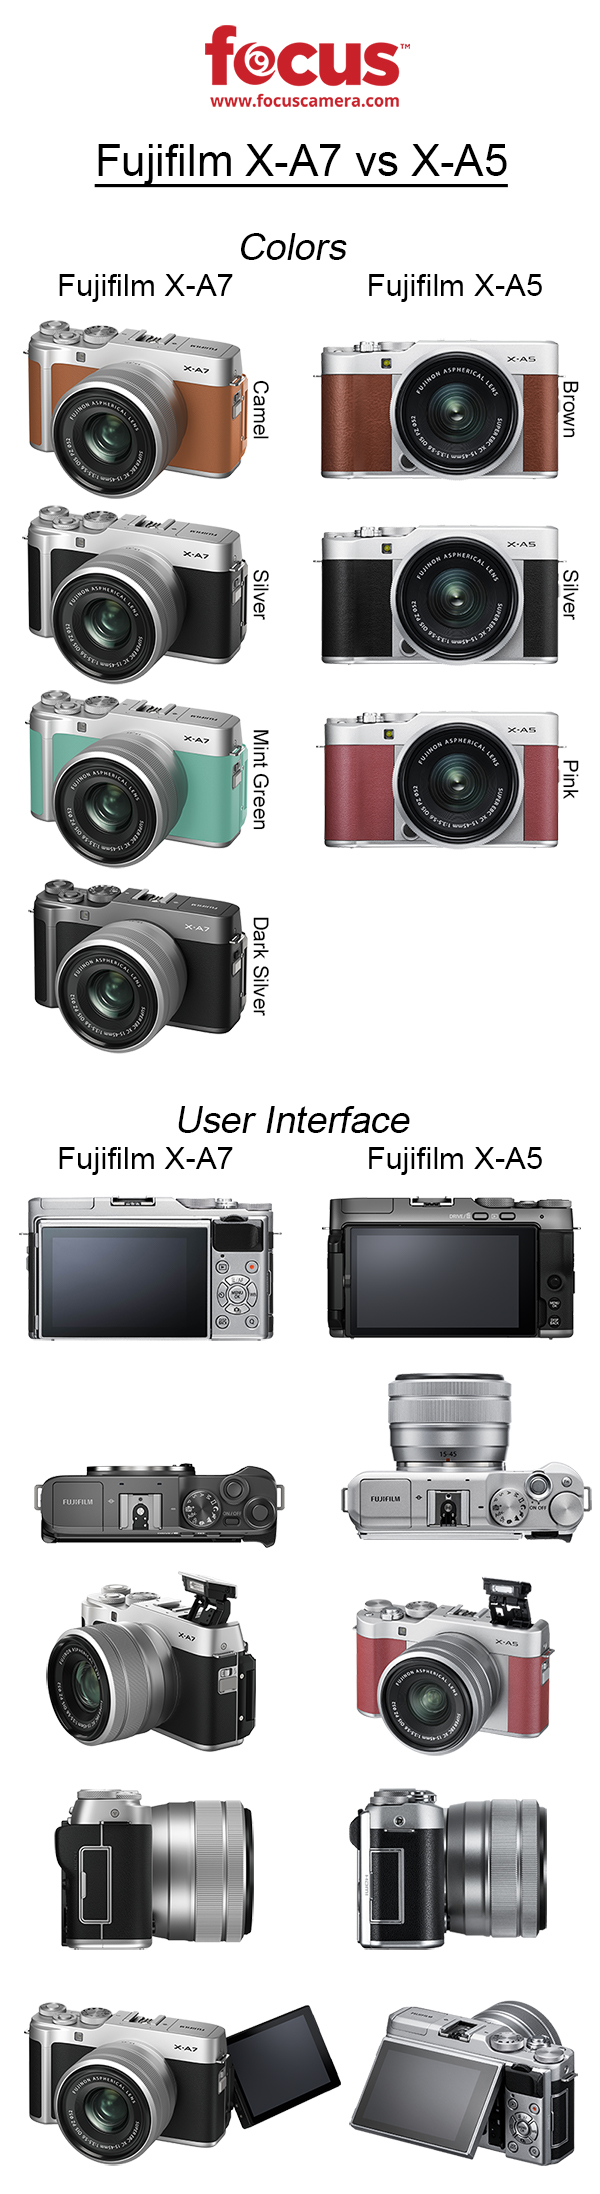 Fujifilm X-A7 vs X-A5 Comparison Photos